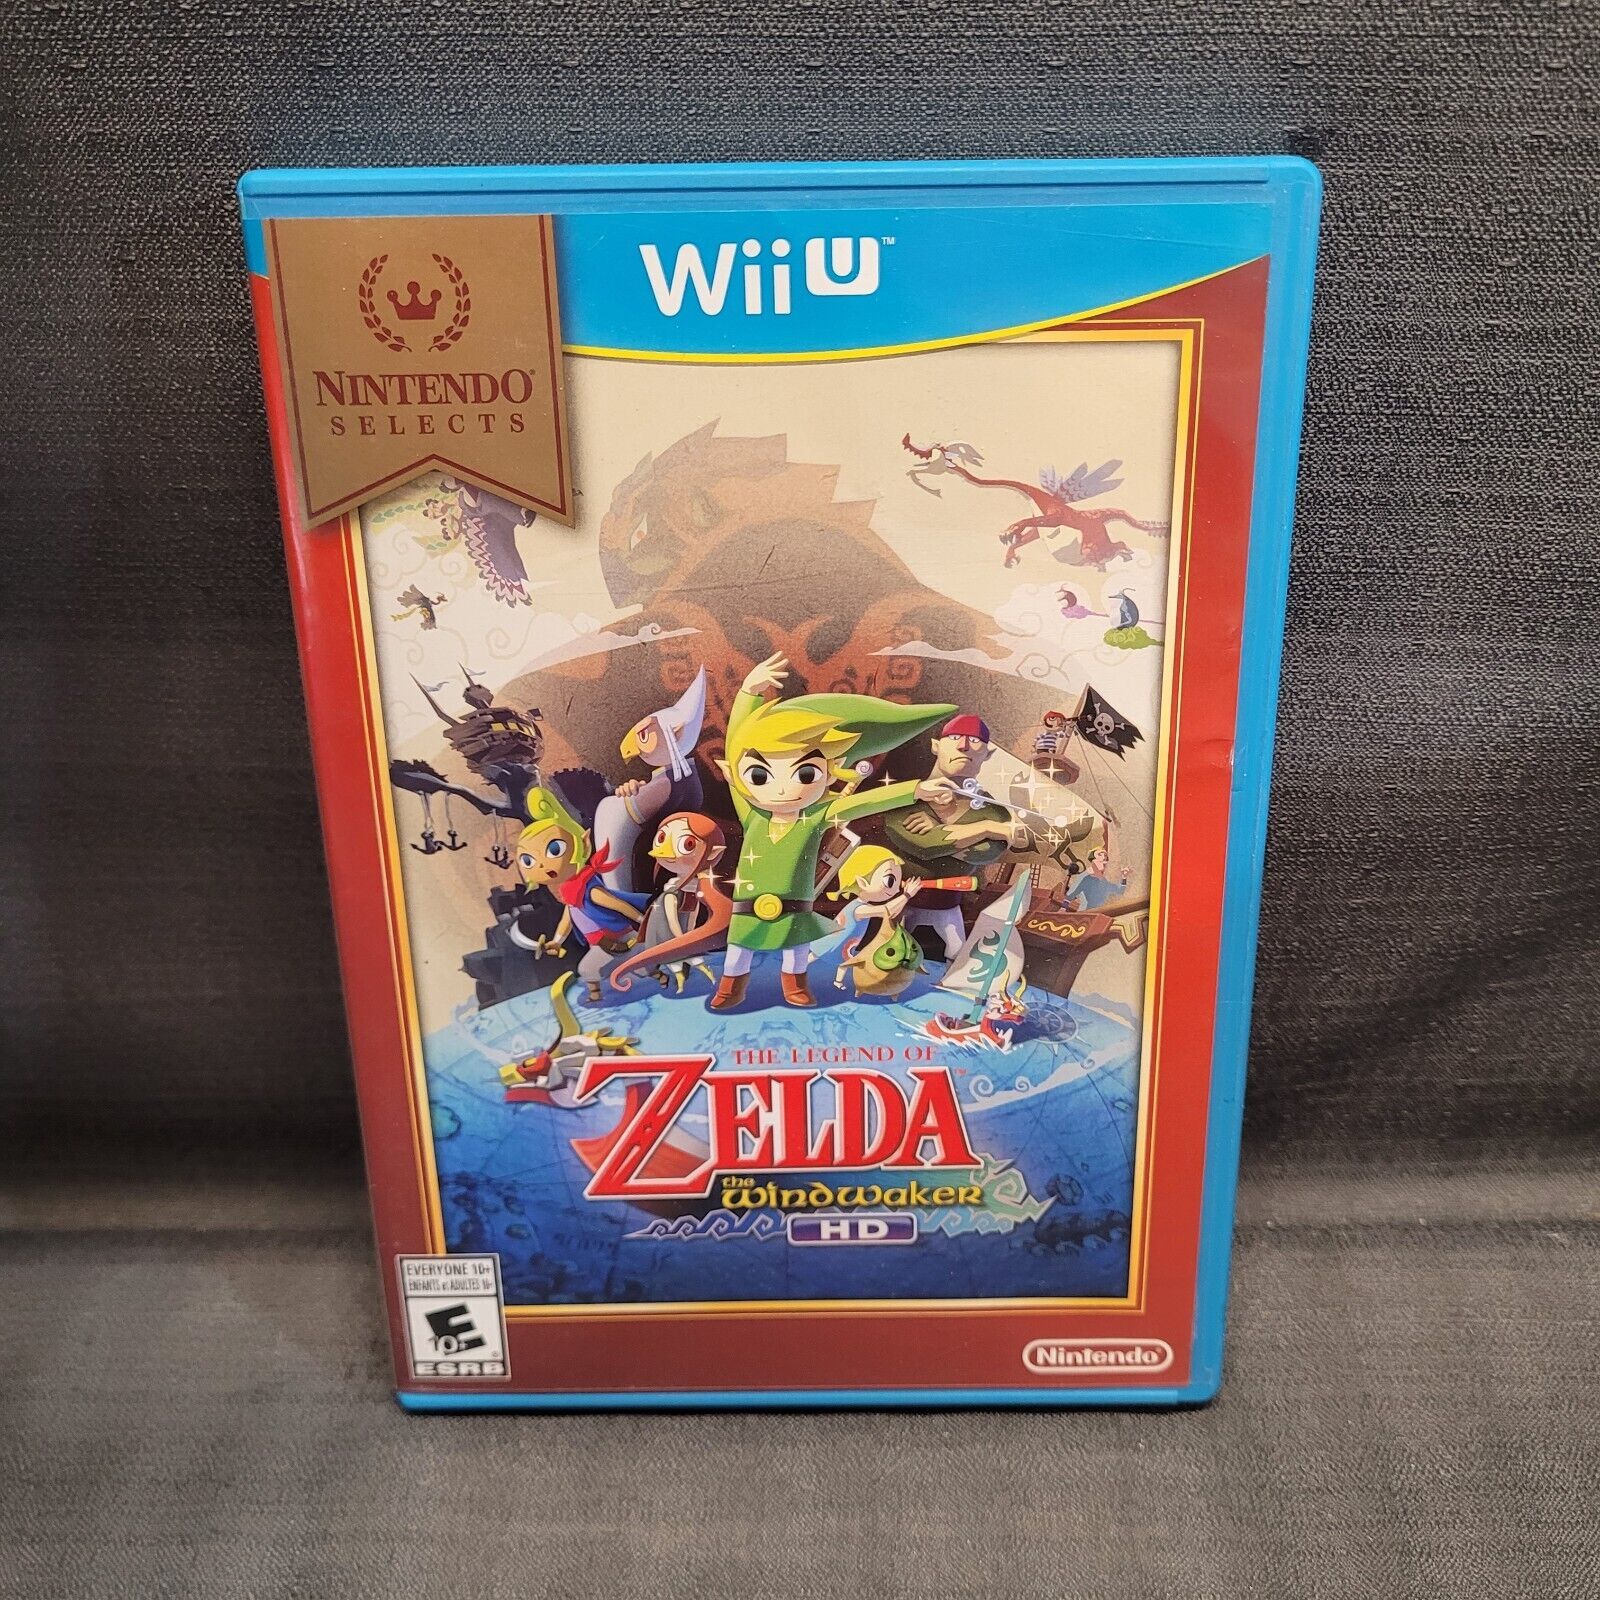 The Legend of Zelda: The Wind Waker HD Ninetbdo Selects (Nintendo WII U, 2013) - $53.46